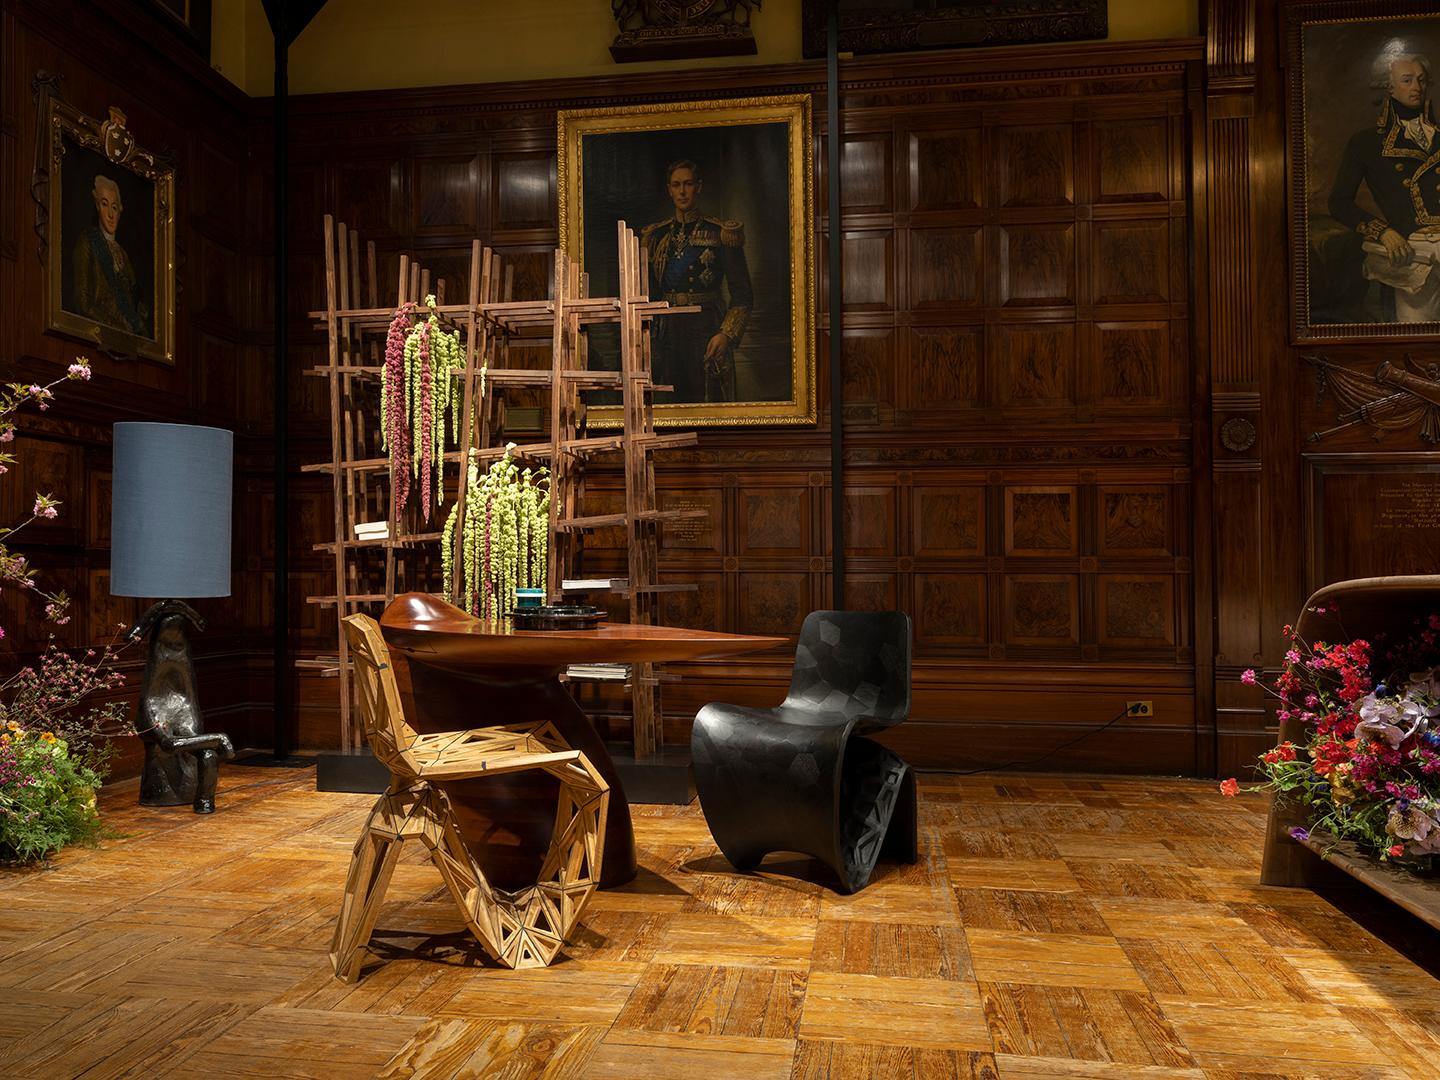 Joris Laarman [Dutch, b. 1979]
Maker Chair (Voronoi), 2014
Walnut
30.75 x 23.75 x 25.5 inches
78 x 60 x 65 cm
Edition of 16

Dutch designer, Joris Laarman, is internationally renowned for his utilization, and often innovation, of cutting-edge